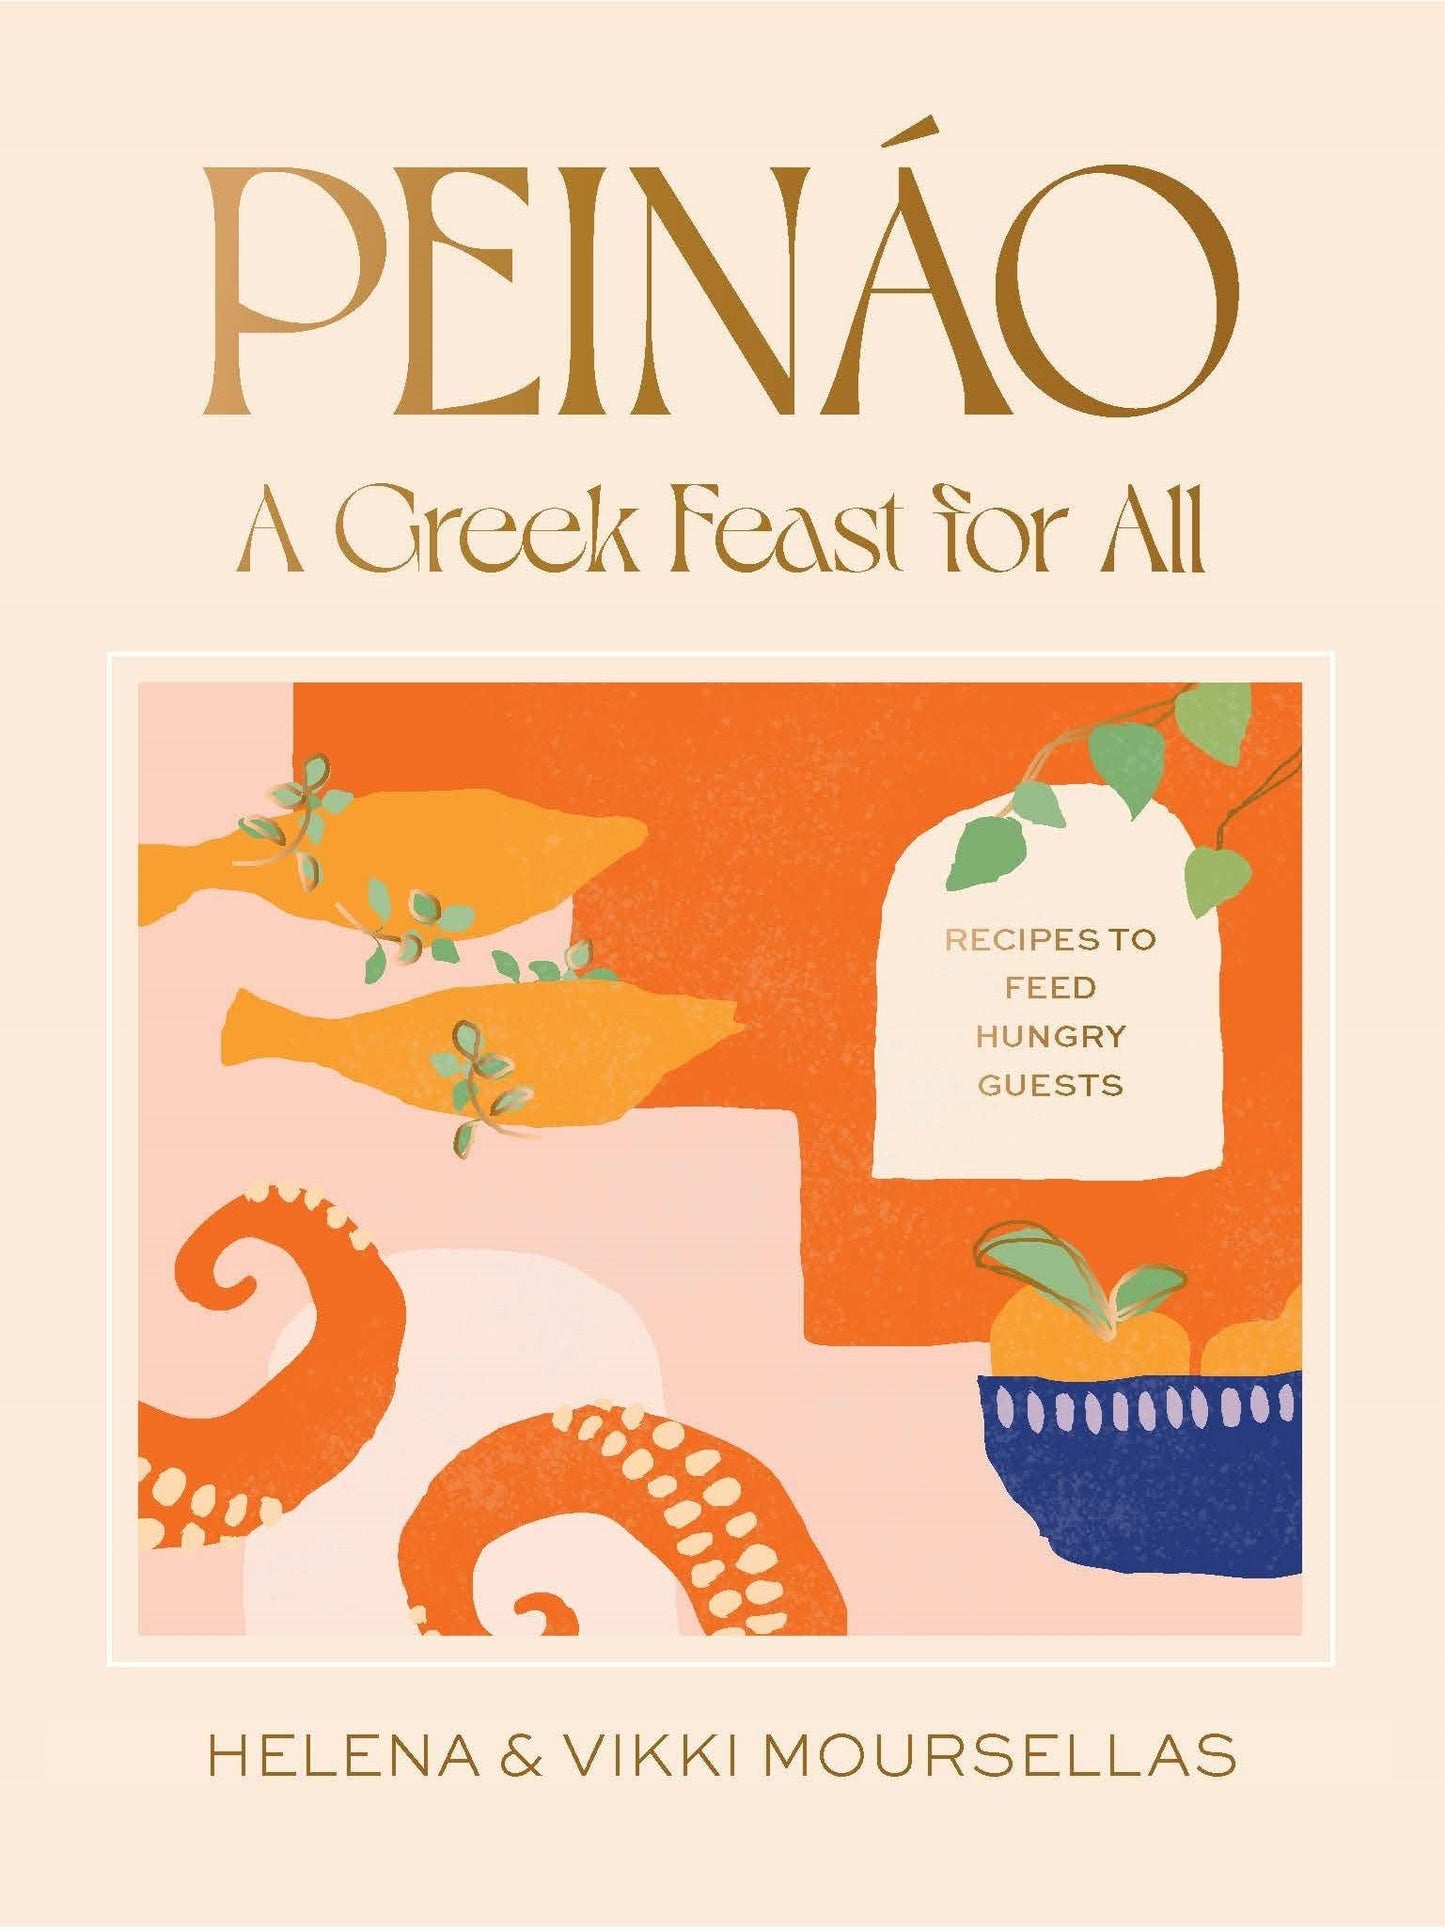 Peaino a greek feast for all book